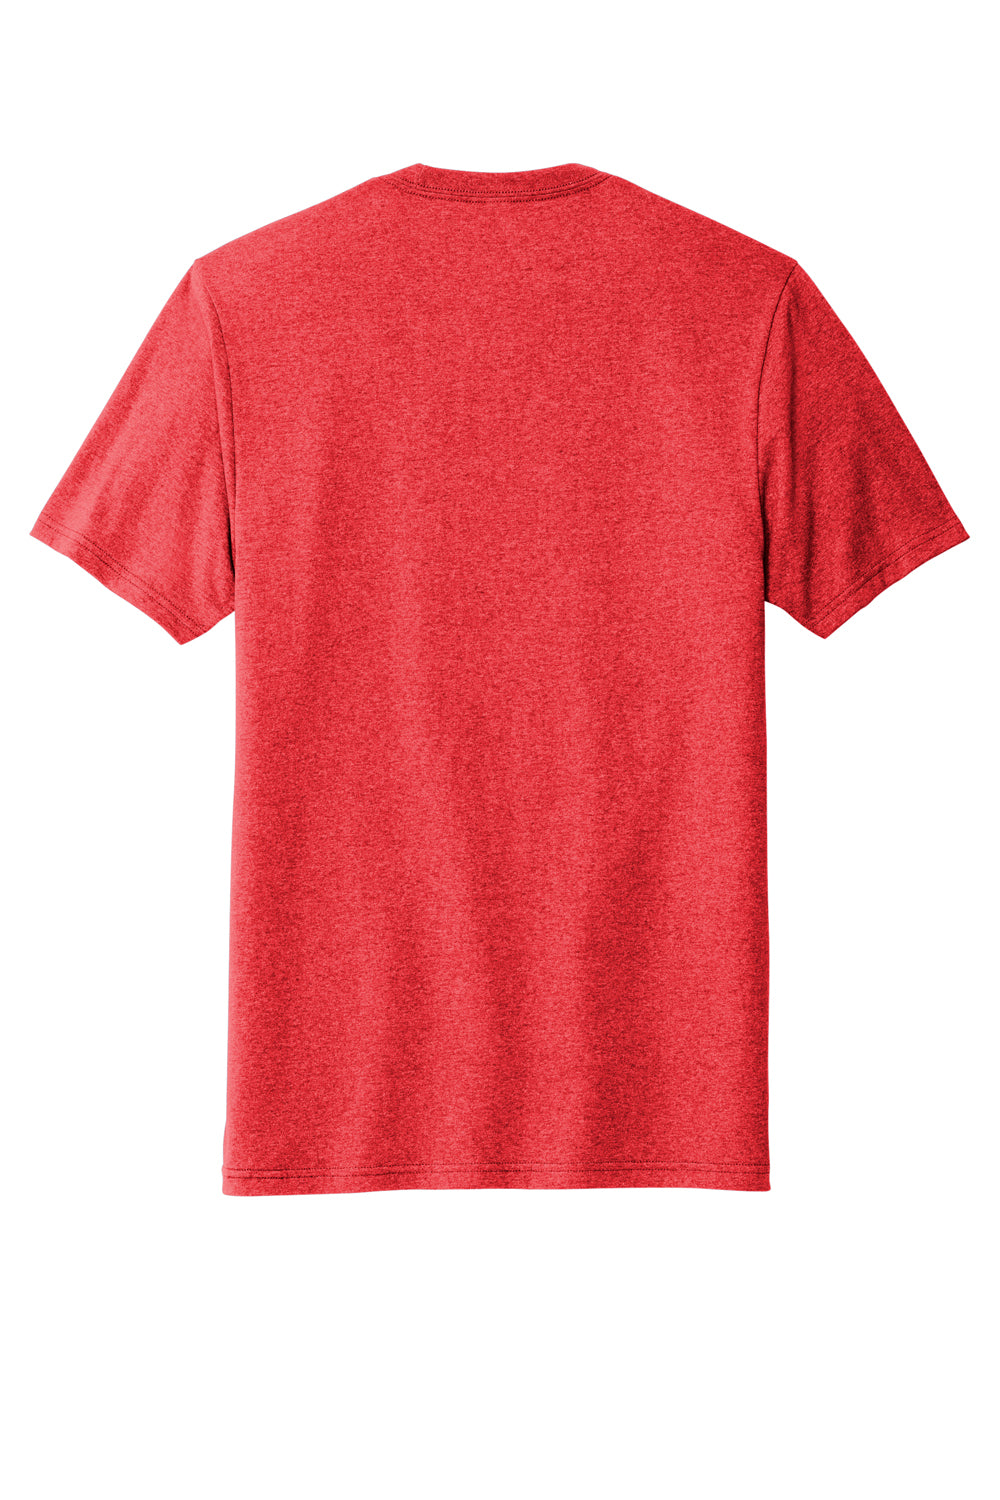 Allmade AL2300 Mens Recycled Short Sleeve Crewneck T-Shirt Heather Red Flat Back